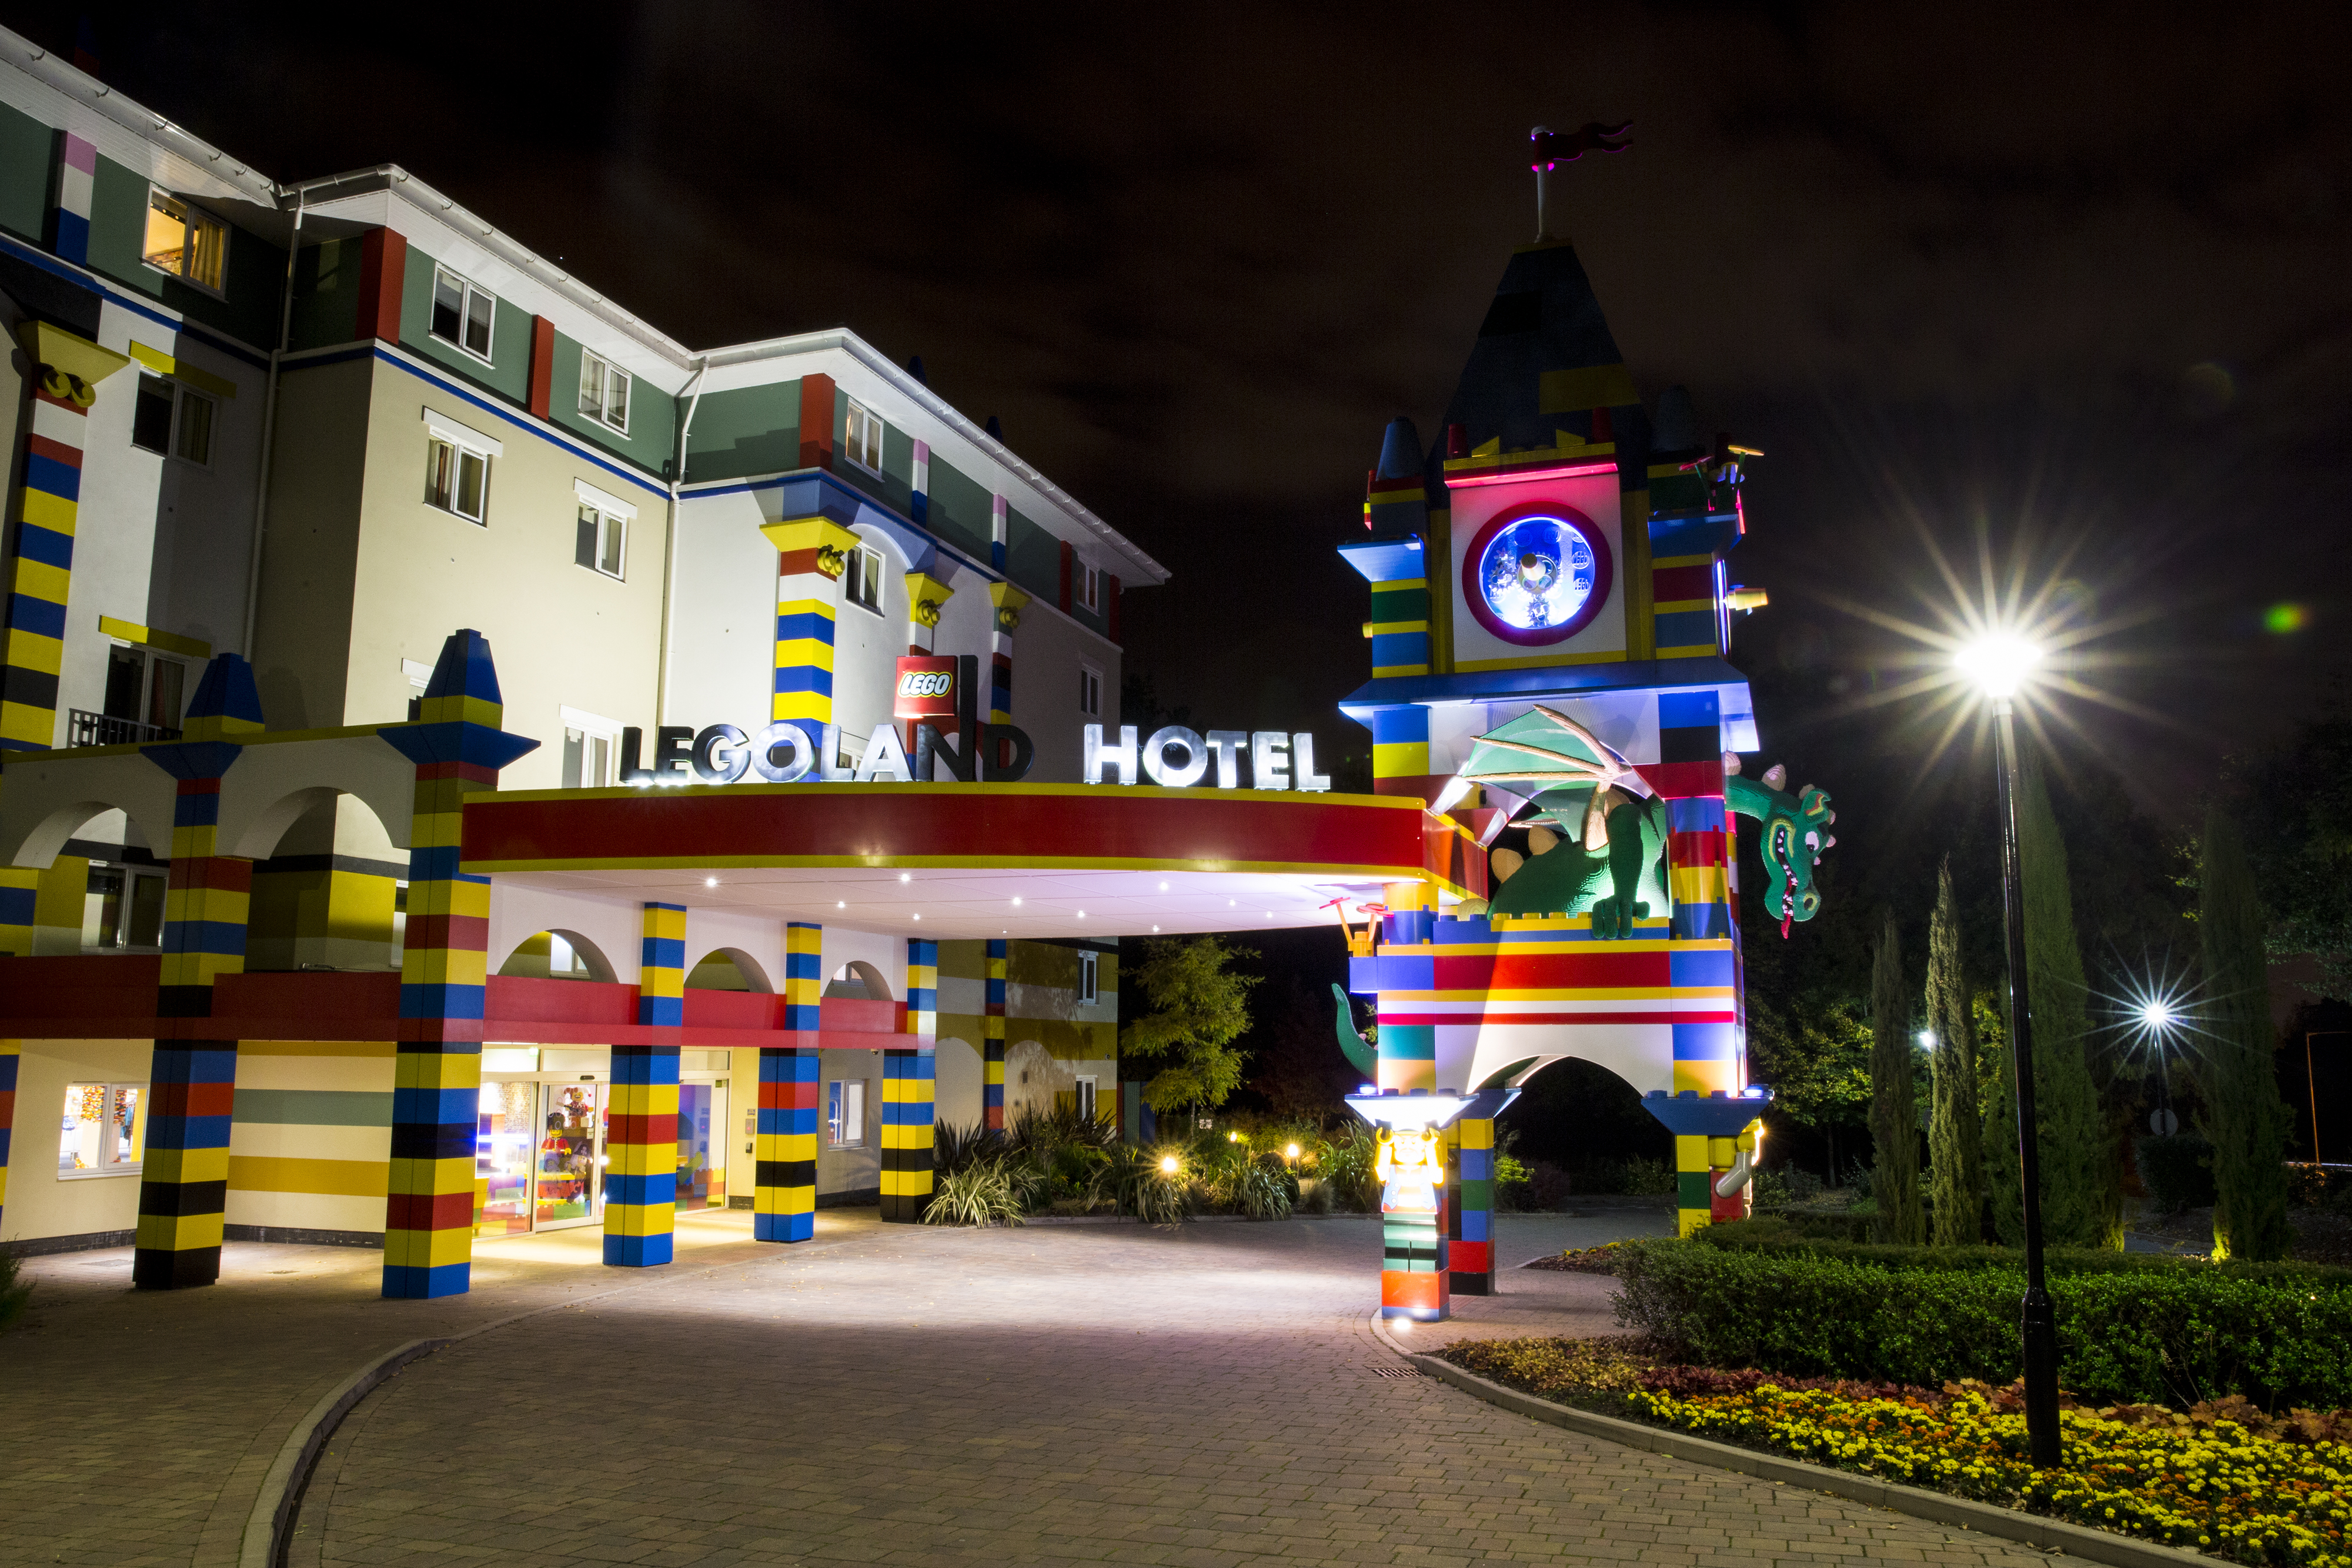 The LEGOLAND Resort Hotel